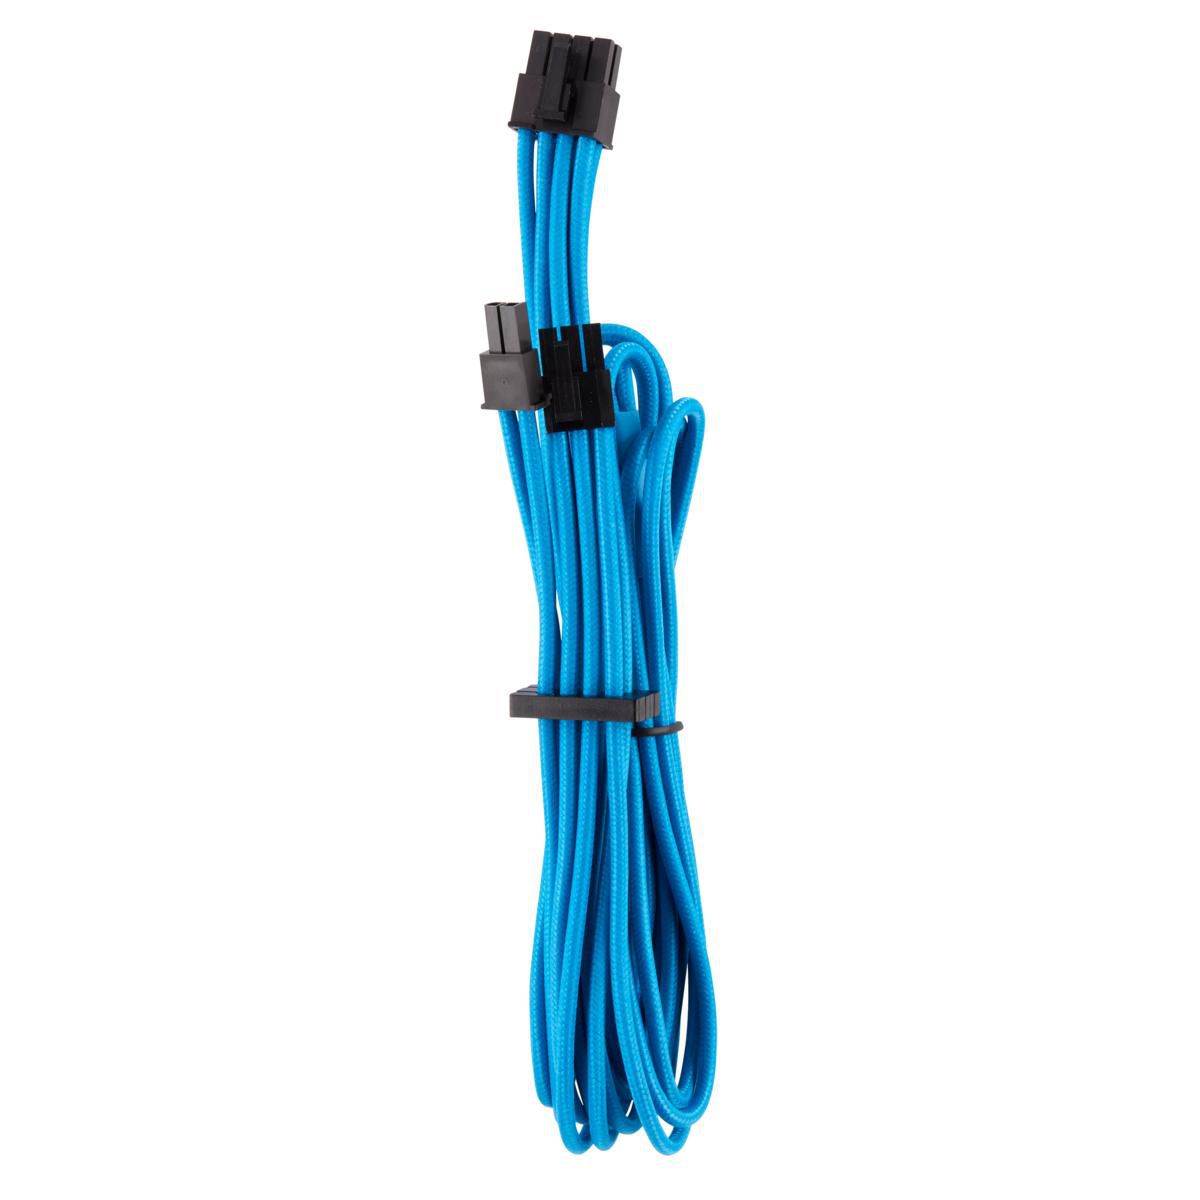 CORSAIR Premium Sleeved PCIe Cable blau